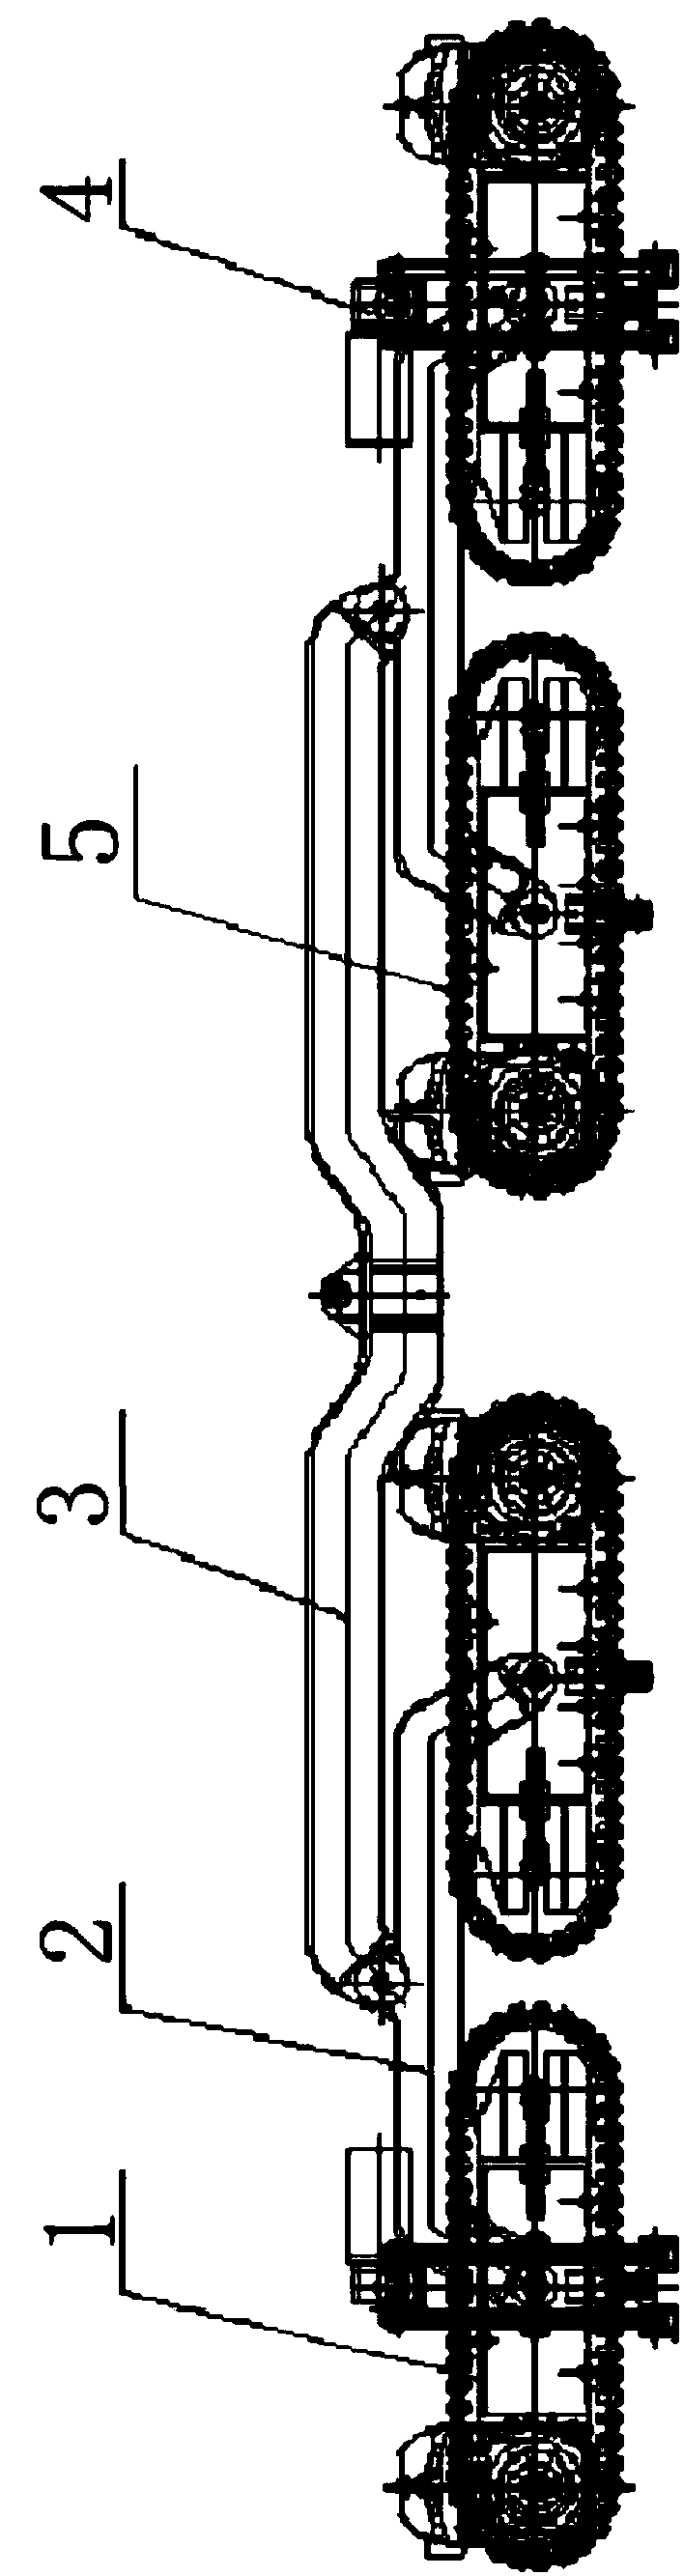 Caterpillar type walking mechanism of upper chord examination vehicle